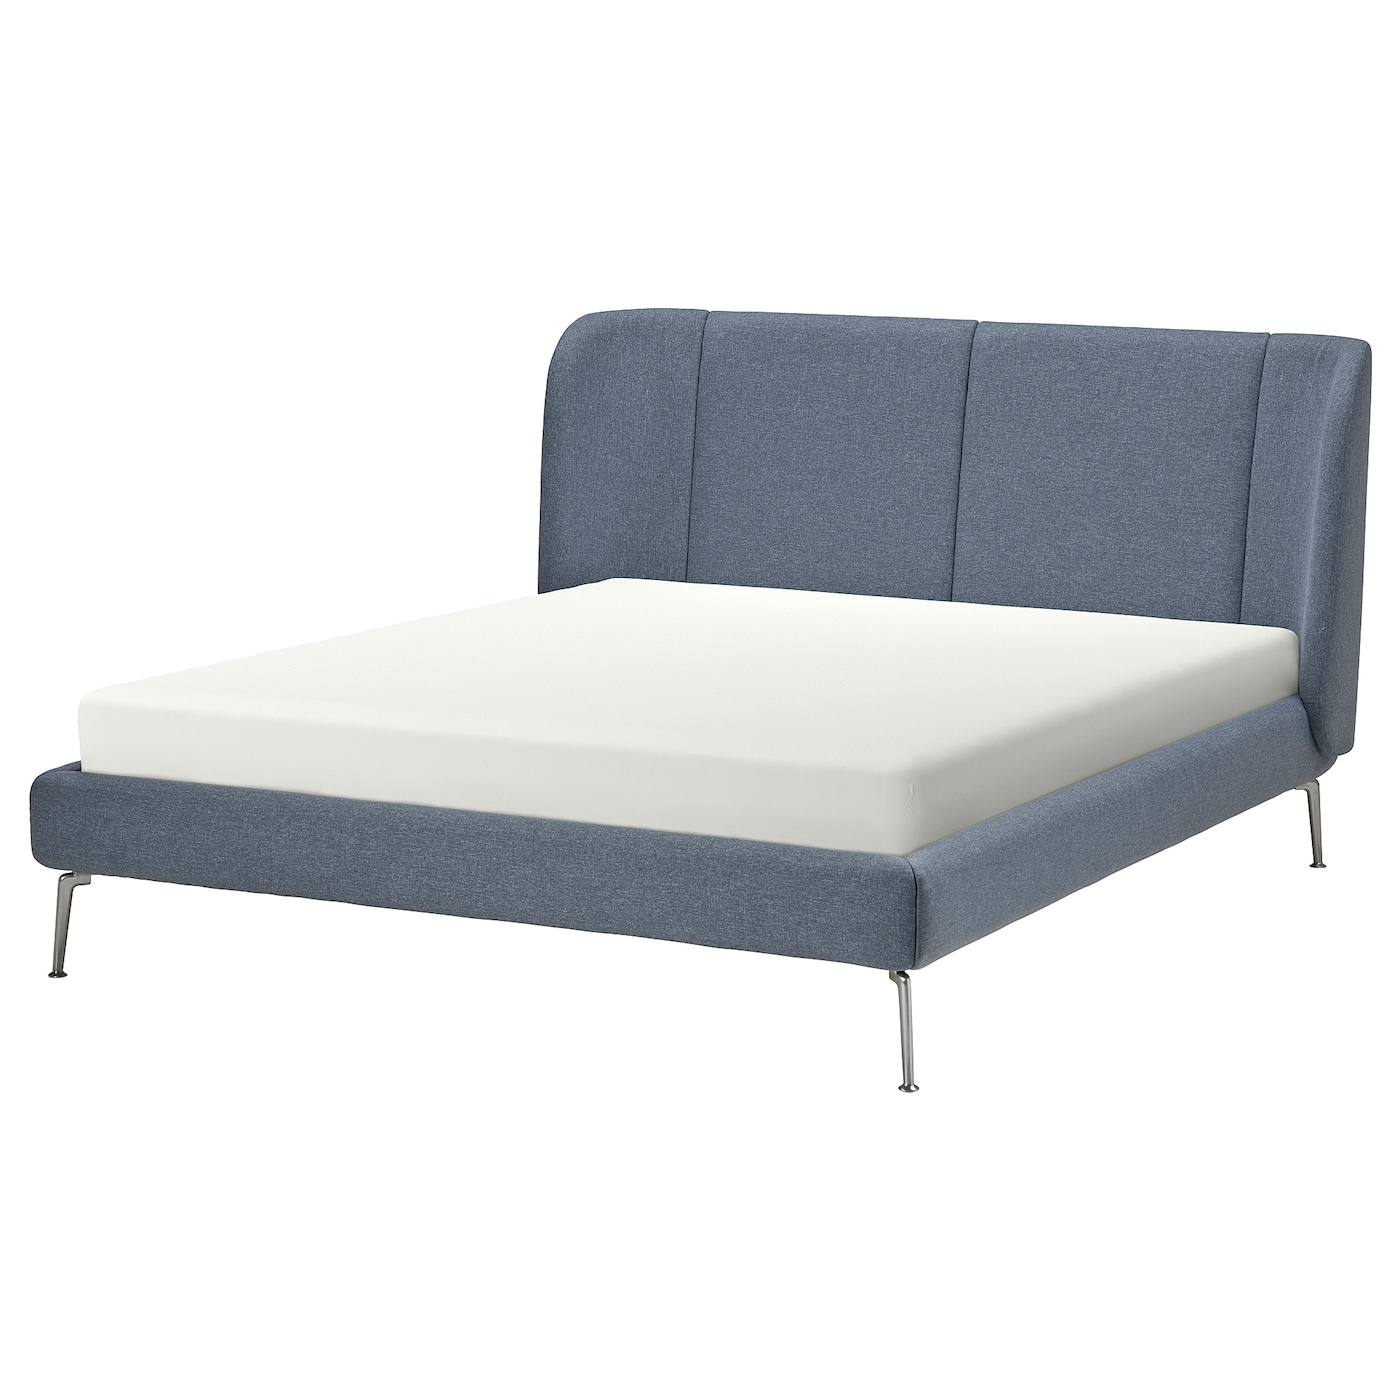 Двуспальная кровать - IKEA TUFJORD, 200х140 см, синий, ТУФЙОРД ИКЕА